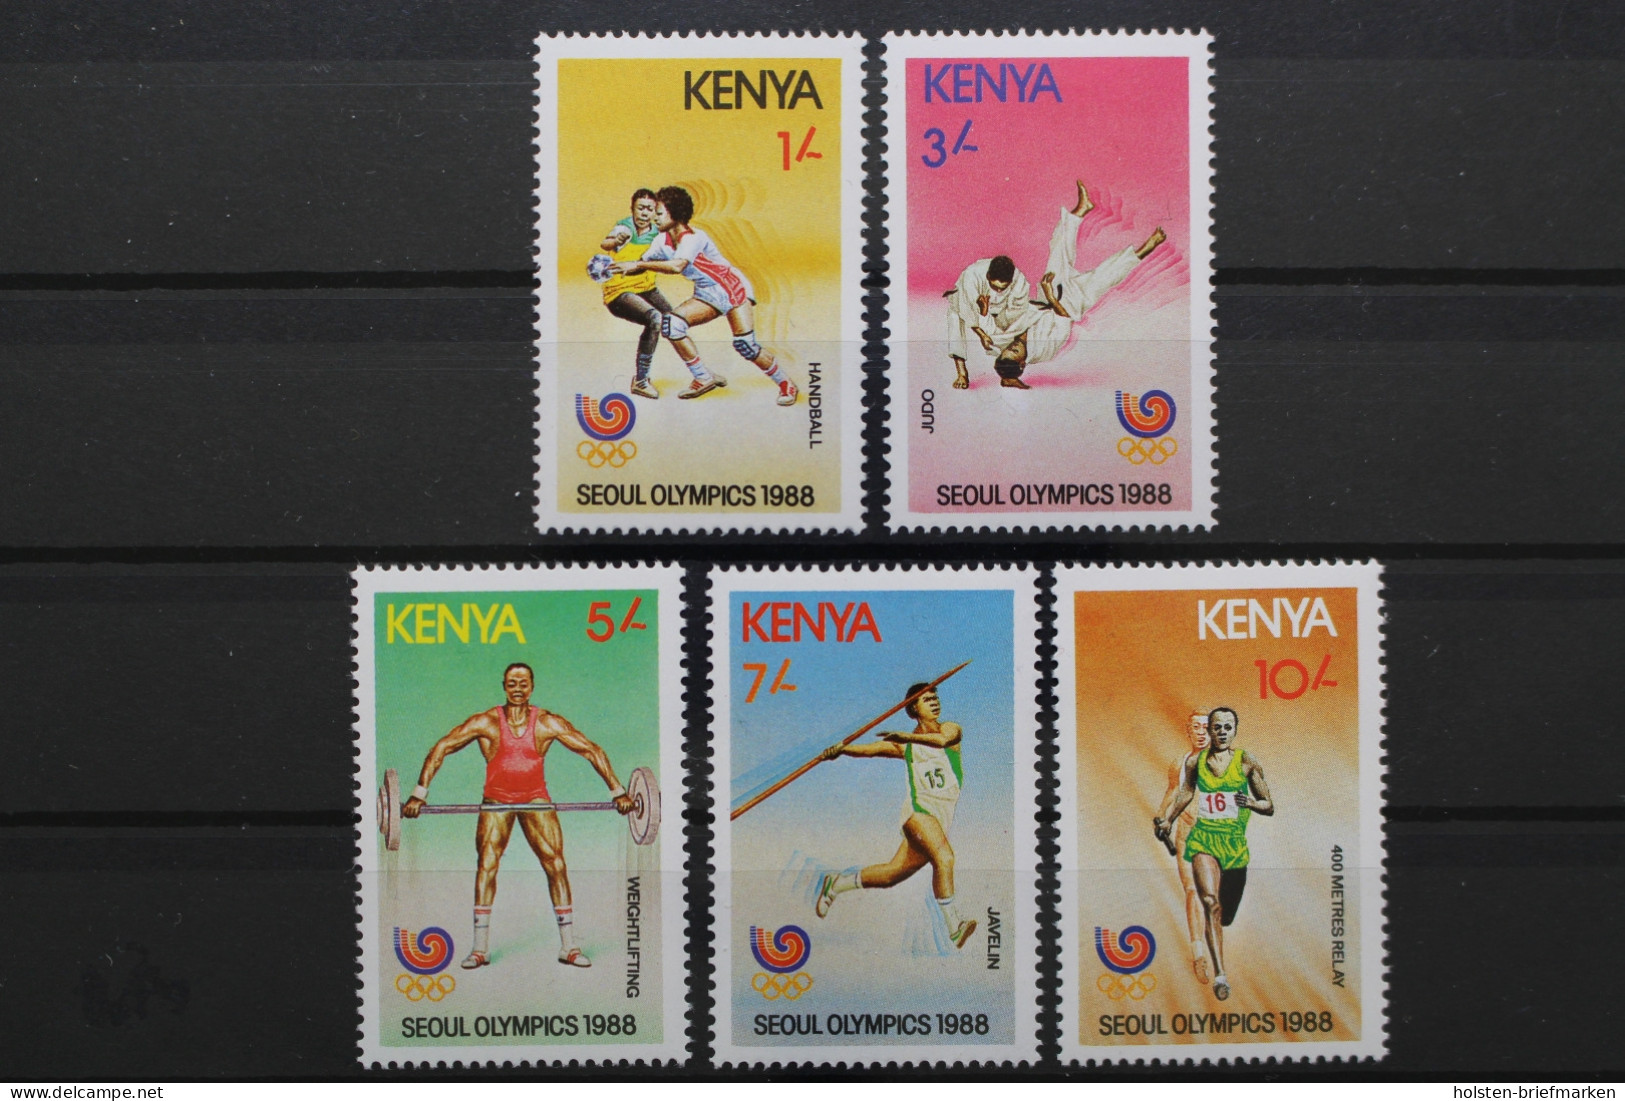 Kenia, MiNr. 447-451, Postfrisch - Kenia (1963-...)